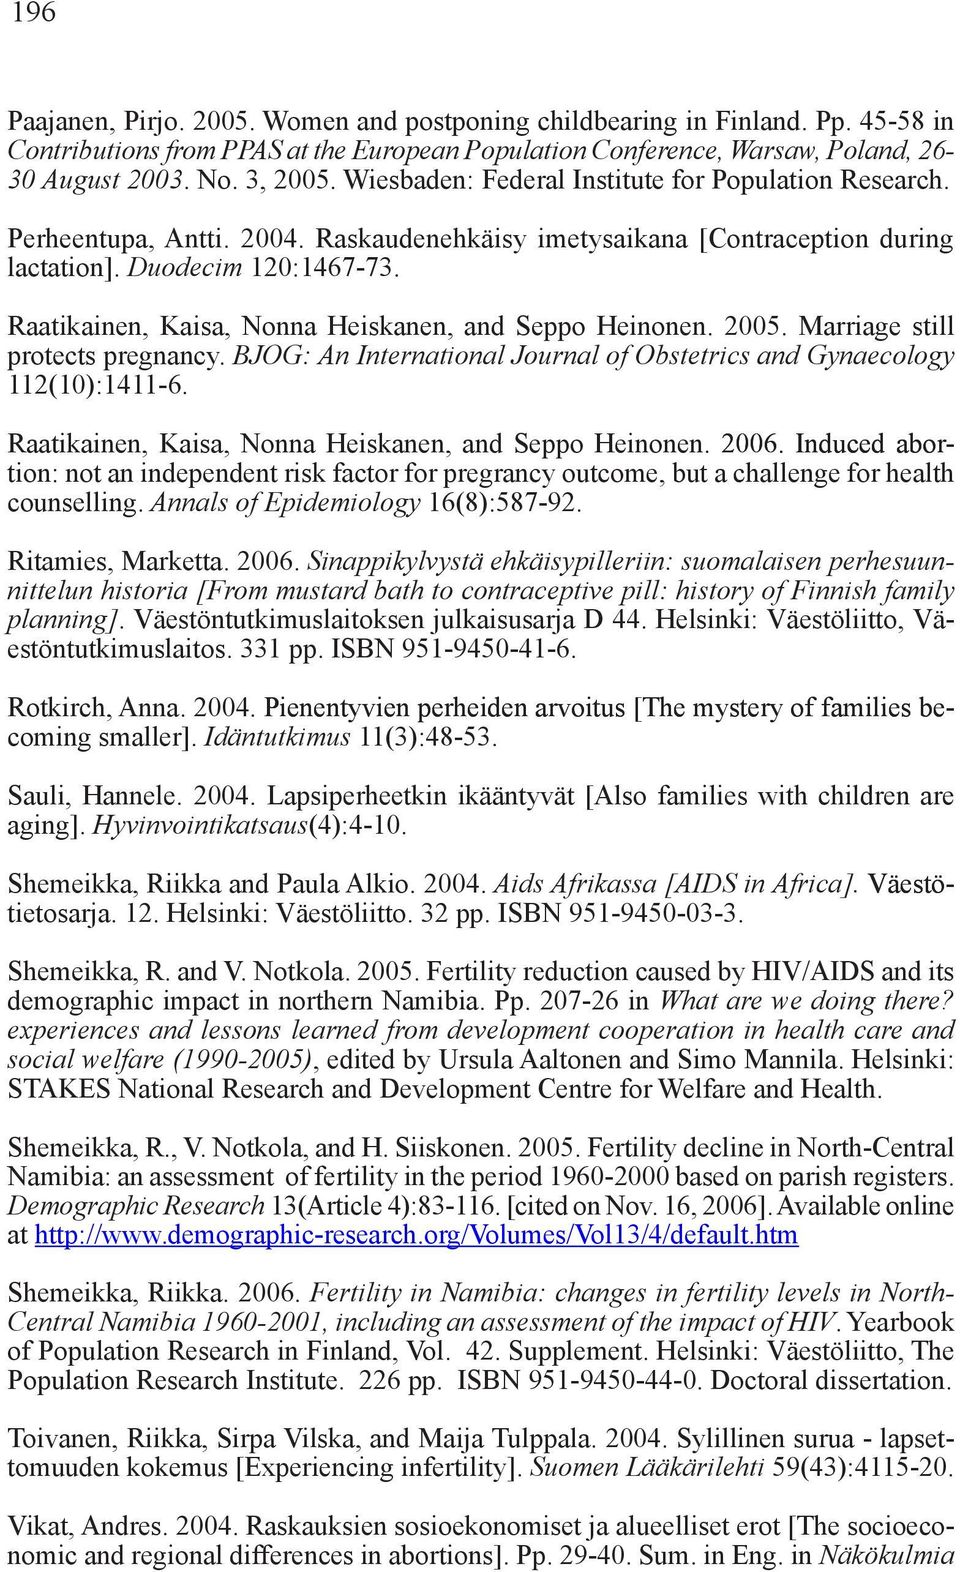 Raatikainen, Kaisa, Nonna Heiskanen, and Seppo Heinonen. 2005. Marriage still protects pregnancy. BJOG: An International Journal of Obstetrics and Gynaecology 112(10):1411-6.